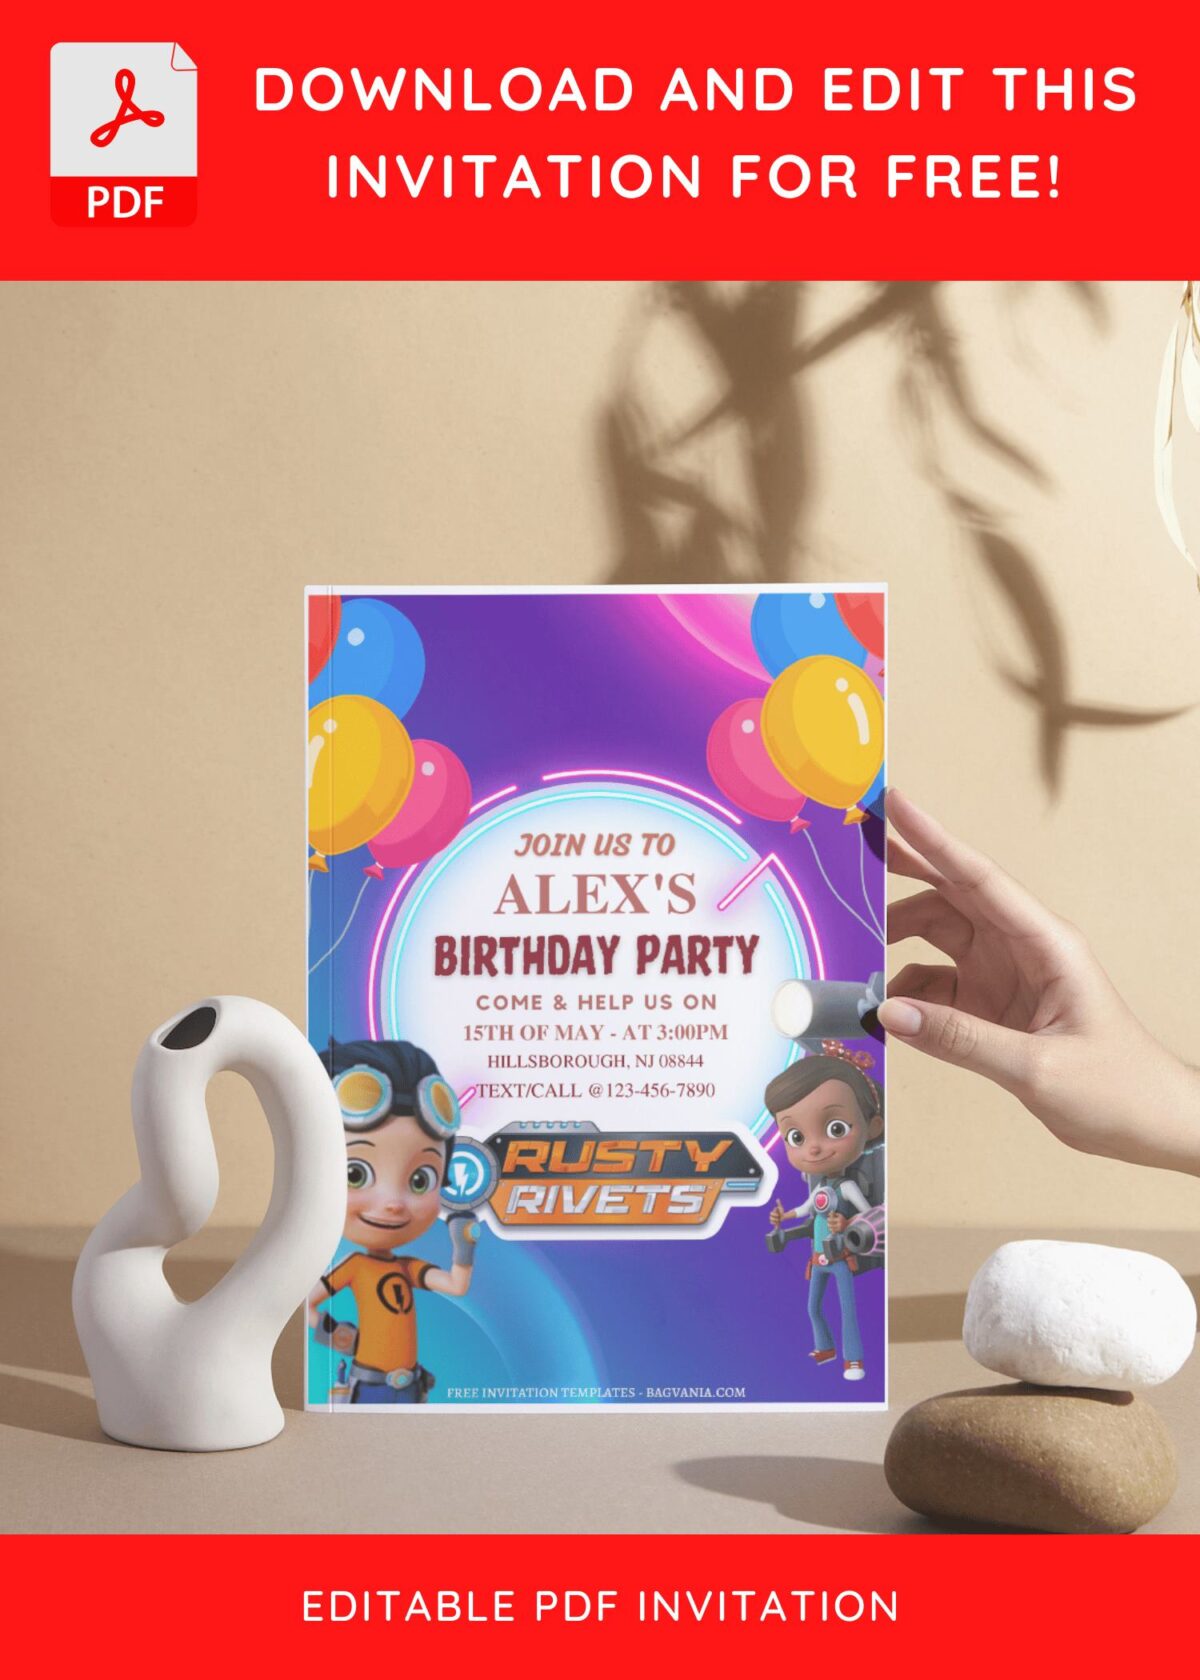 (Free Editable PDF) Fantastic Rusty Rivets Birthday Invitation Templates I